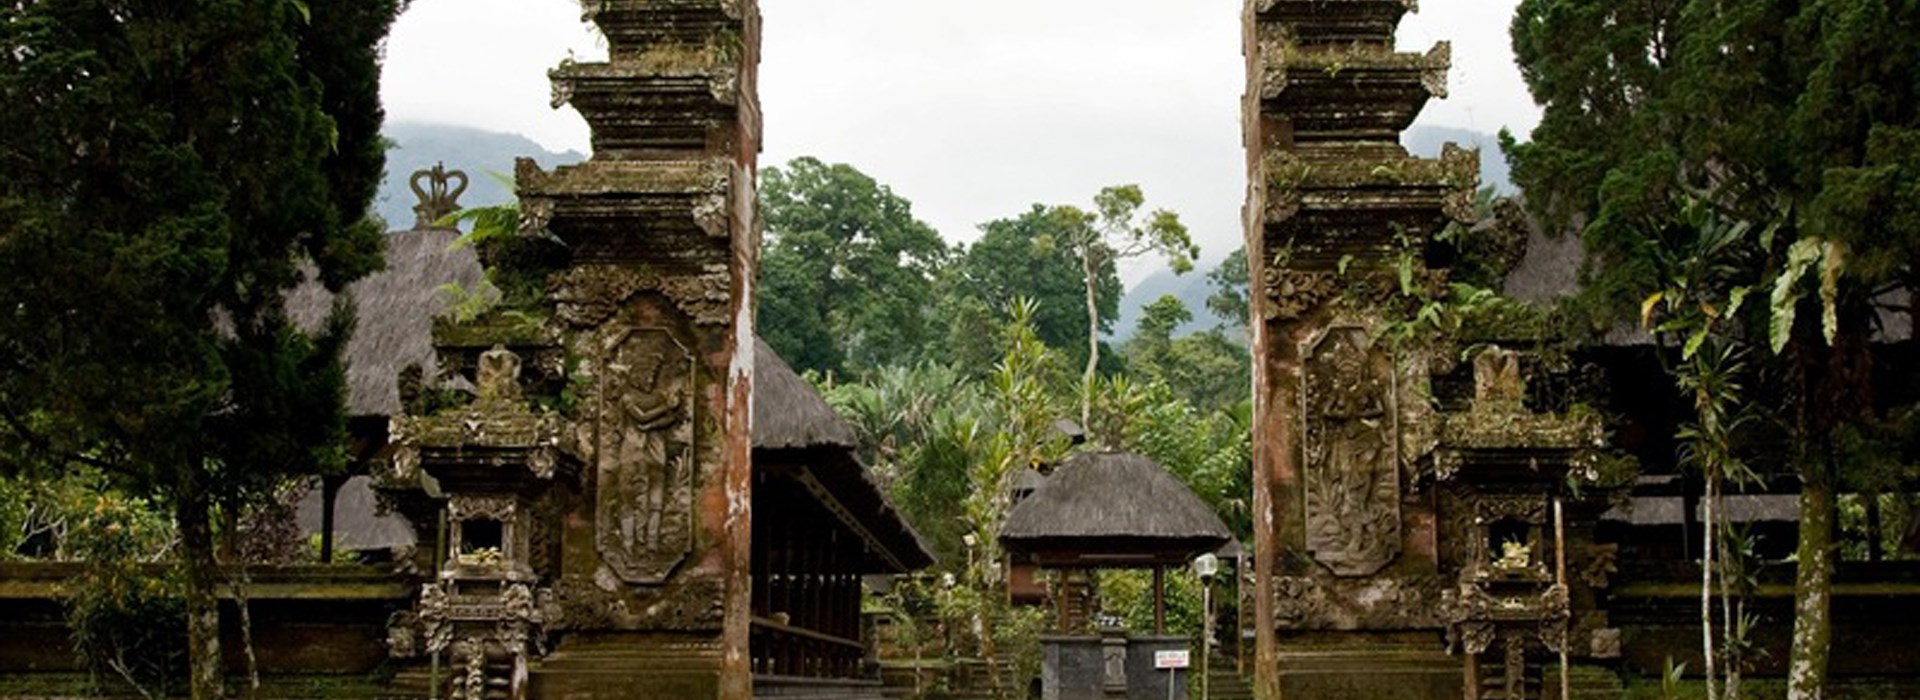 Visiter Le temple Batukaru - Indonesie